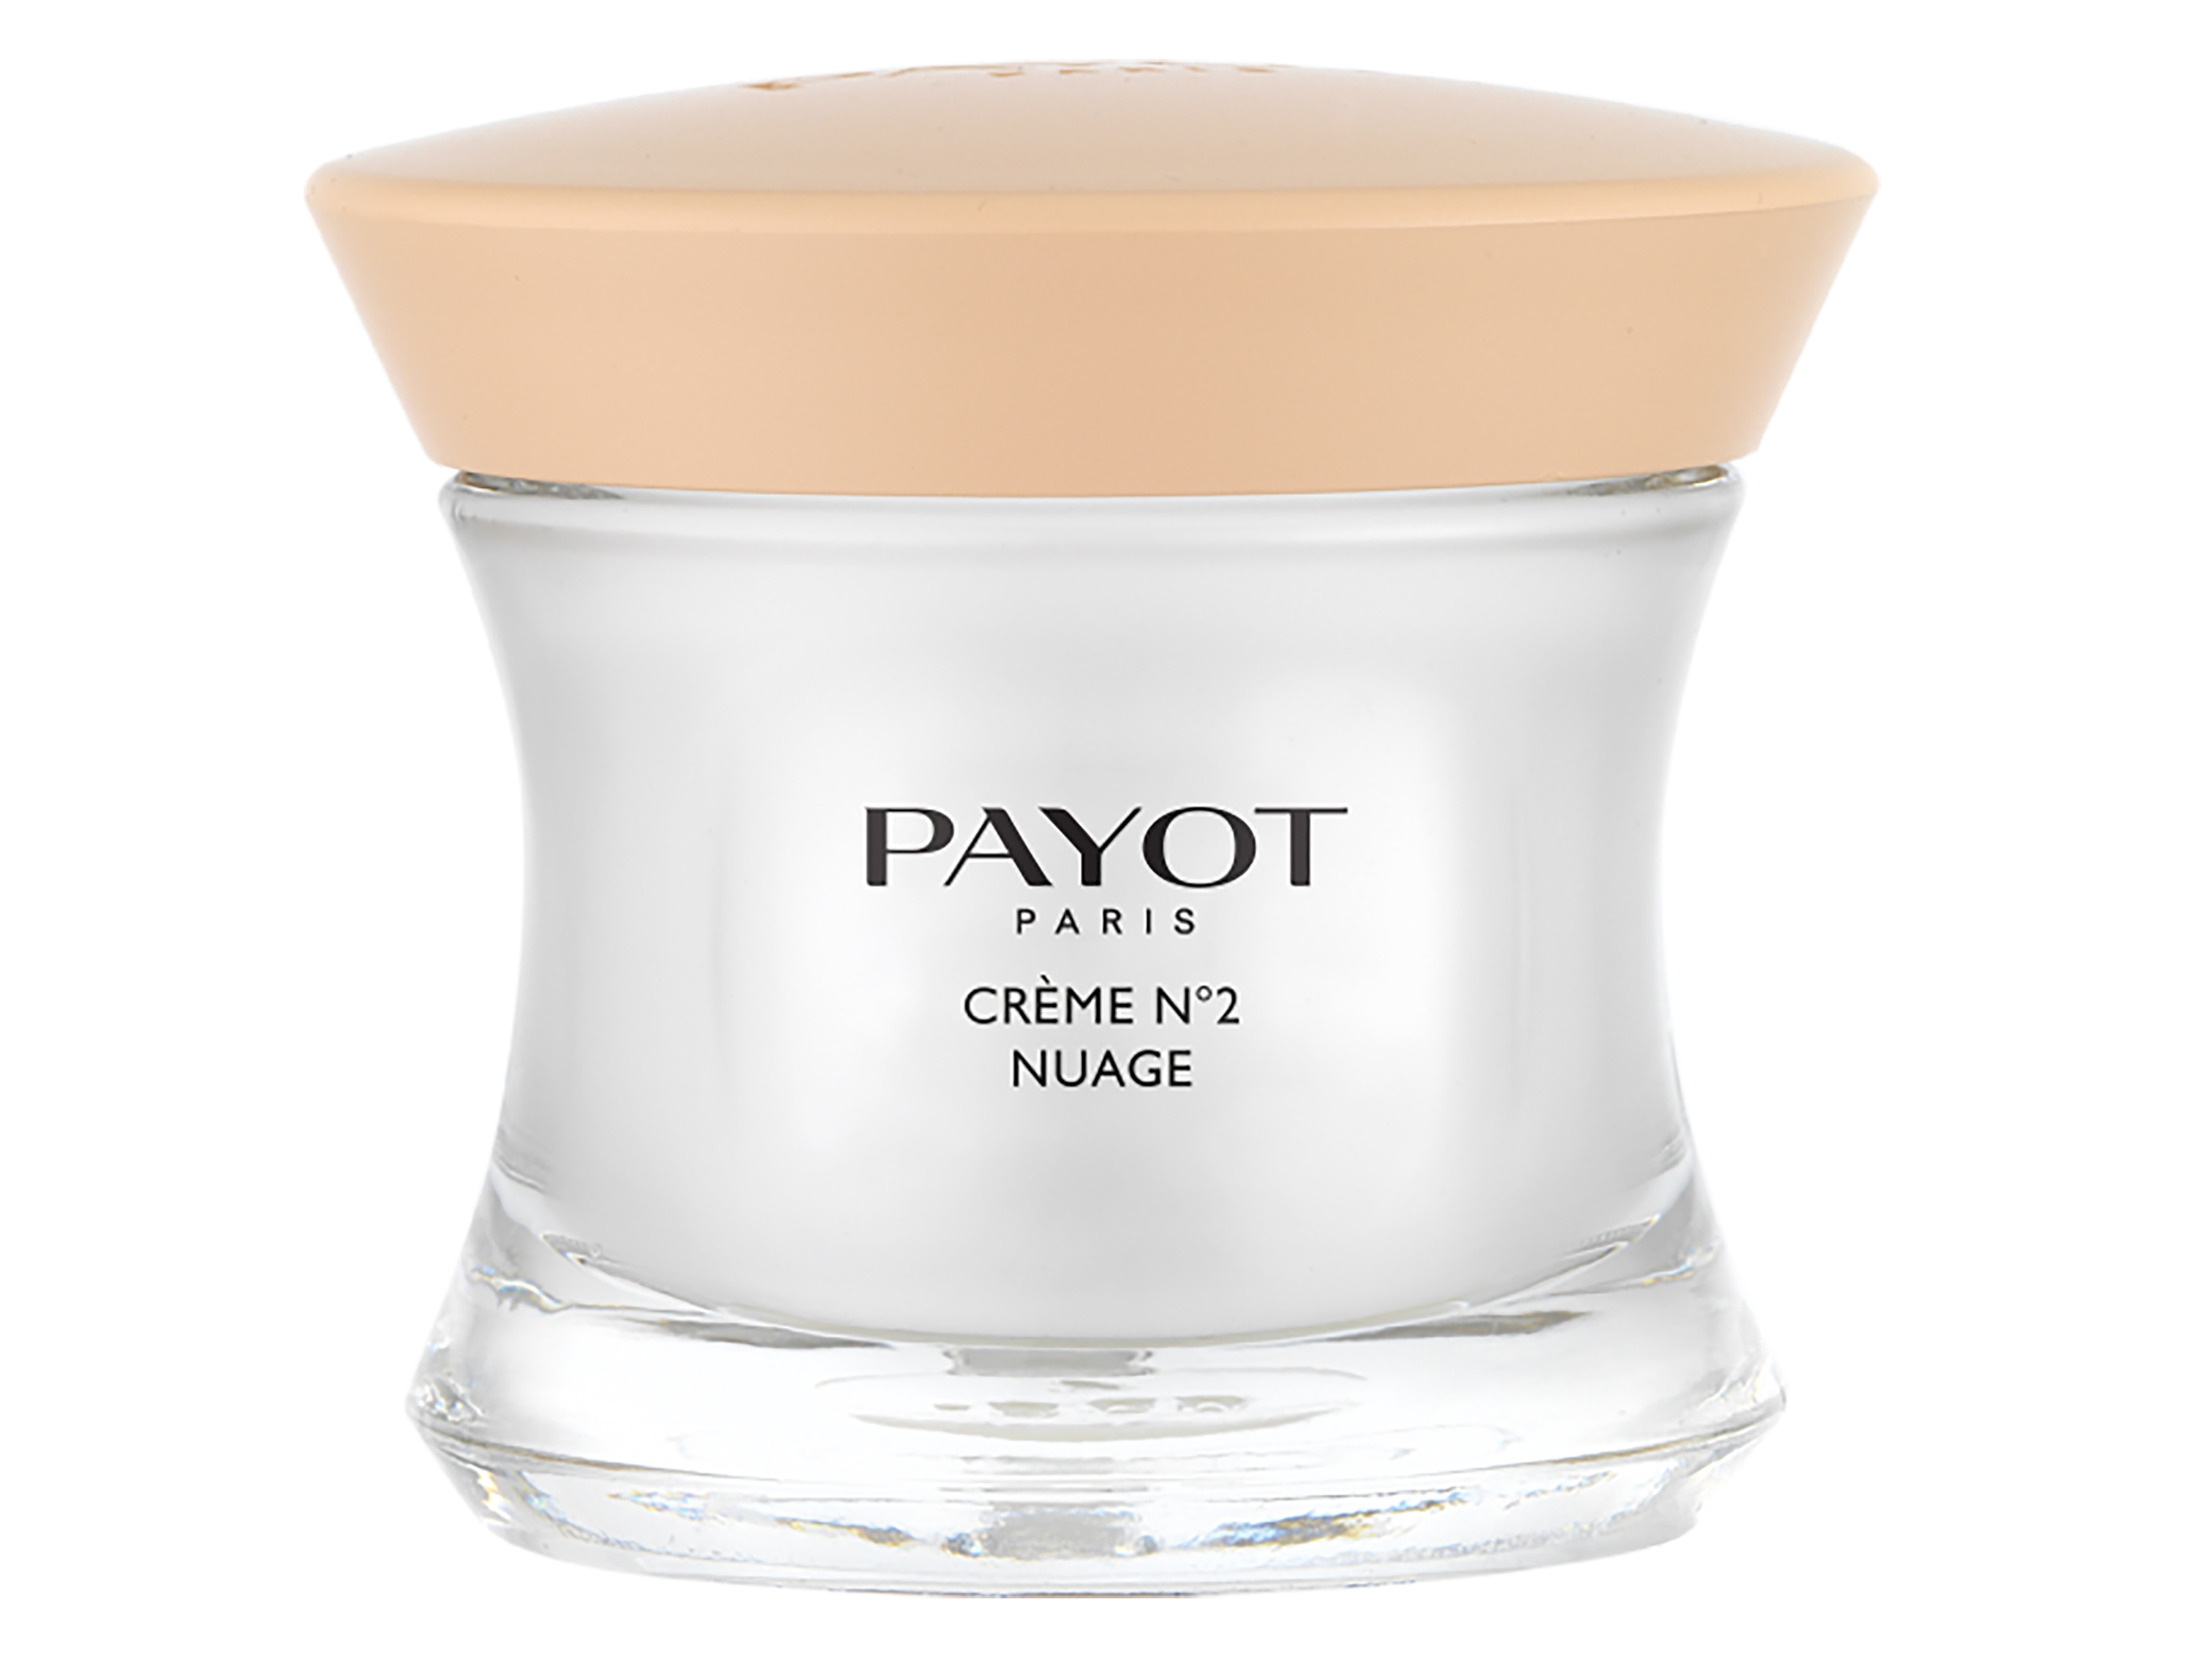 Payot Creme N°2 Nuage, 50 ml